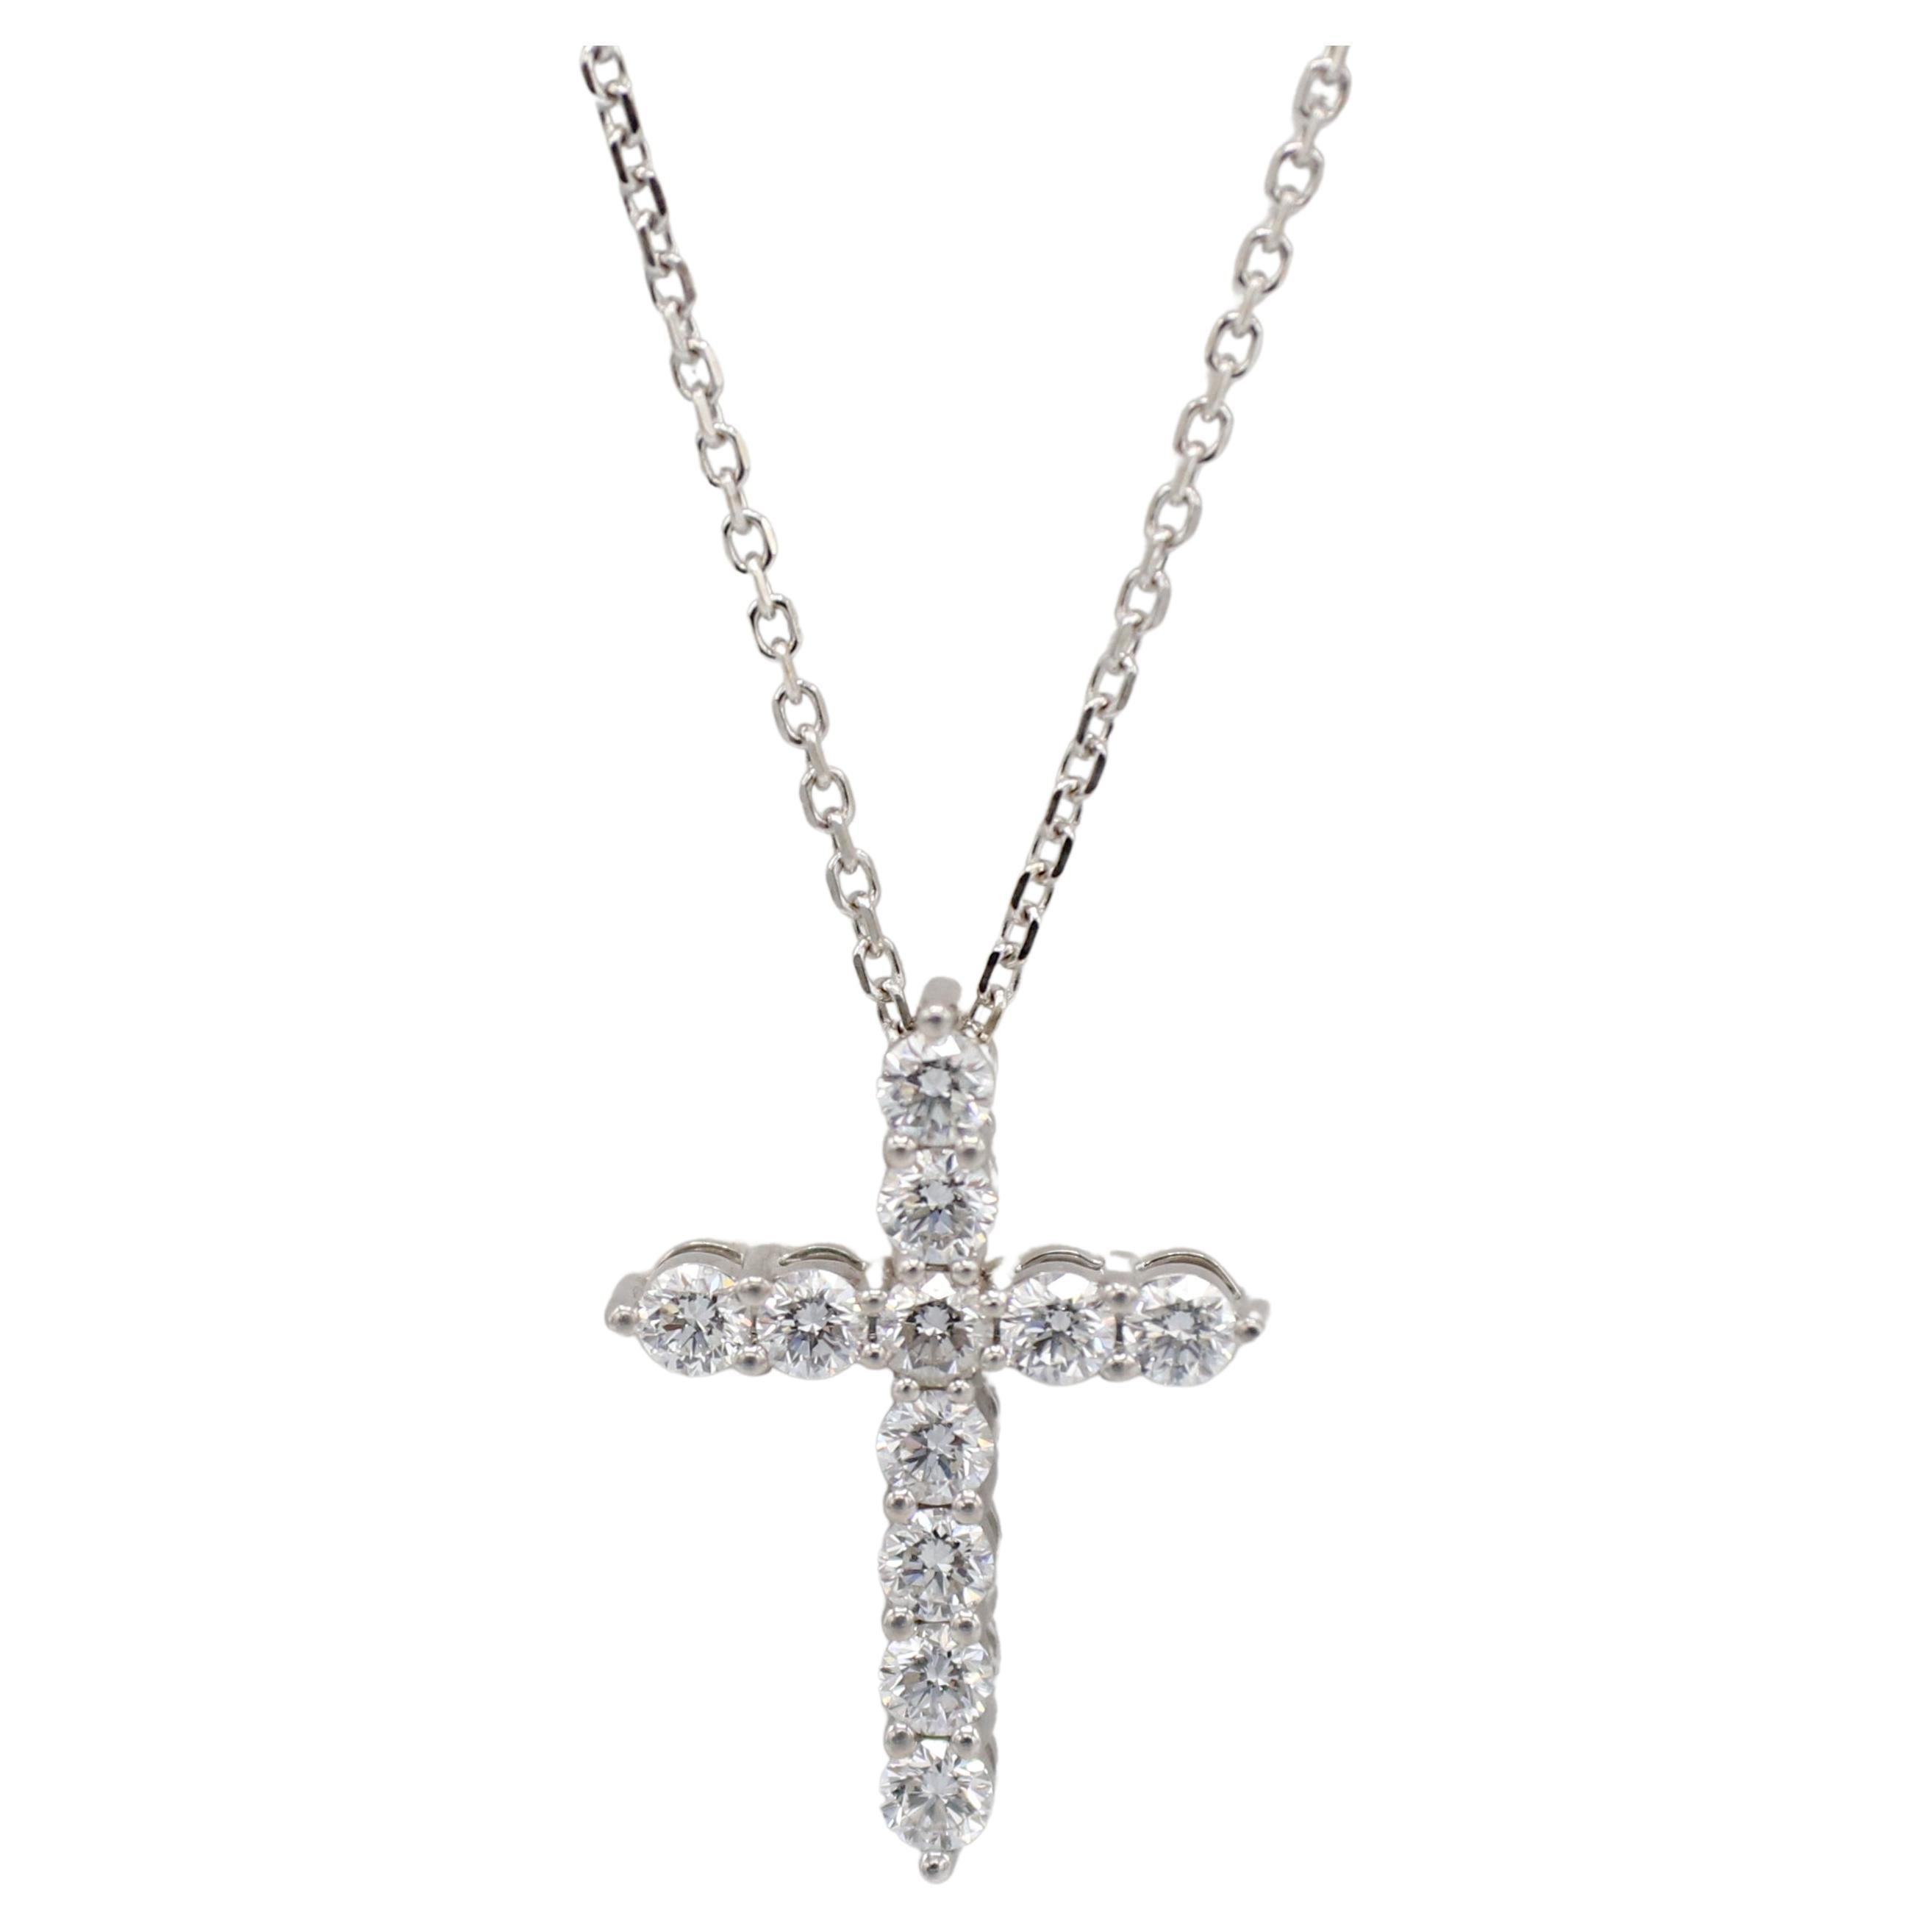 Collier pendentif en or blanc 14 carats avec croix en diamants naturels de 1,00 carat